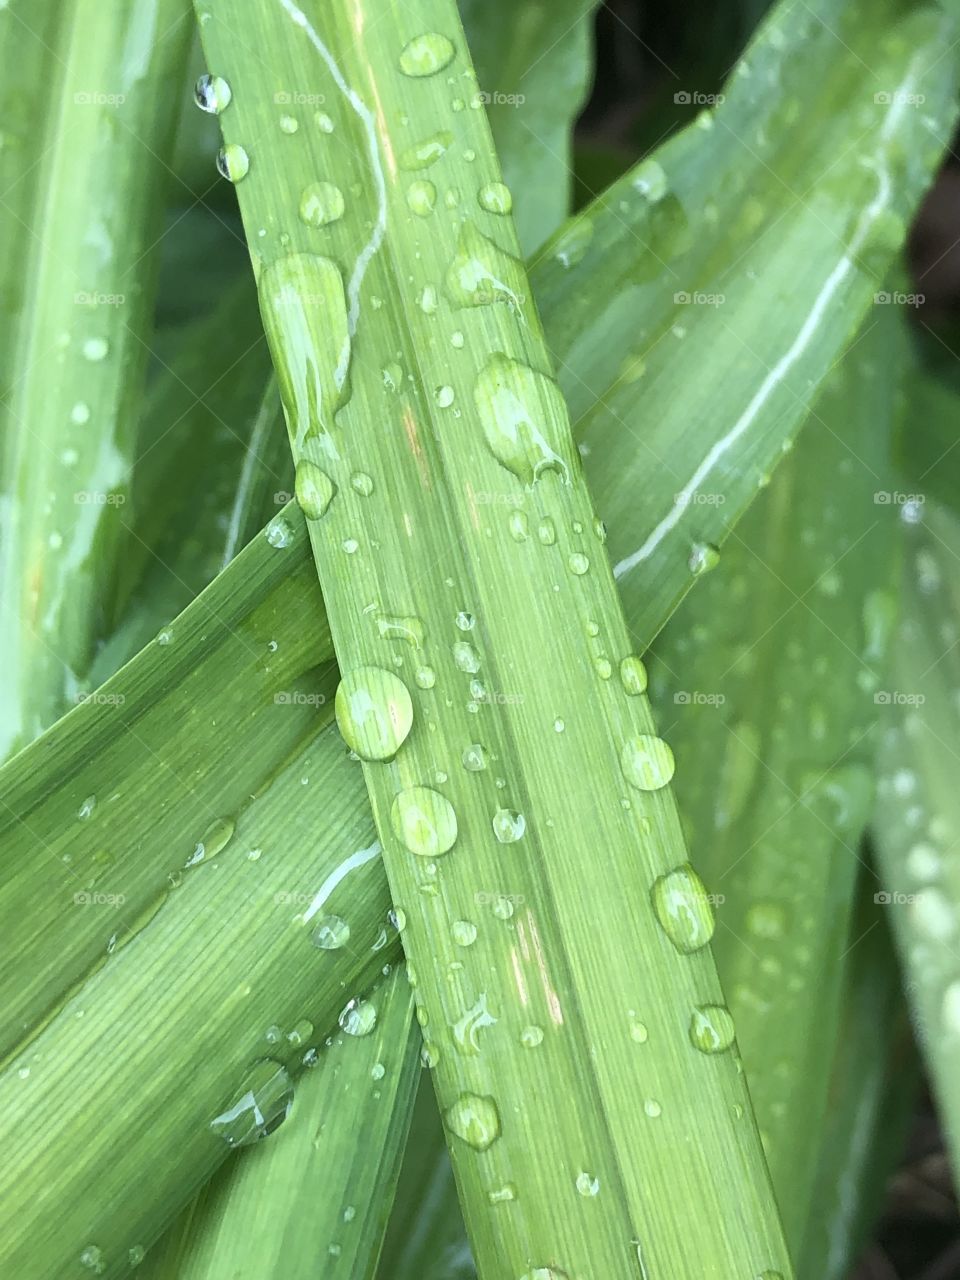 Rain drops on a blade of grass